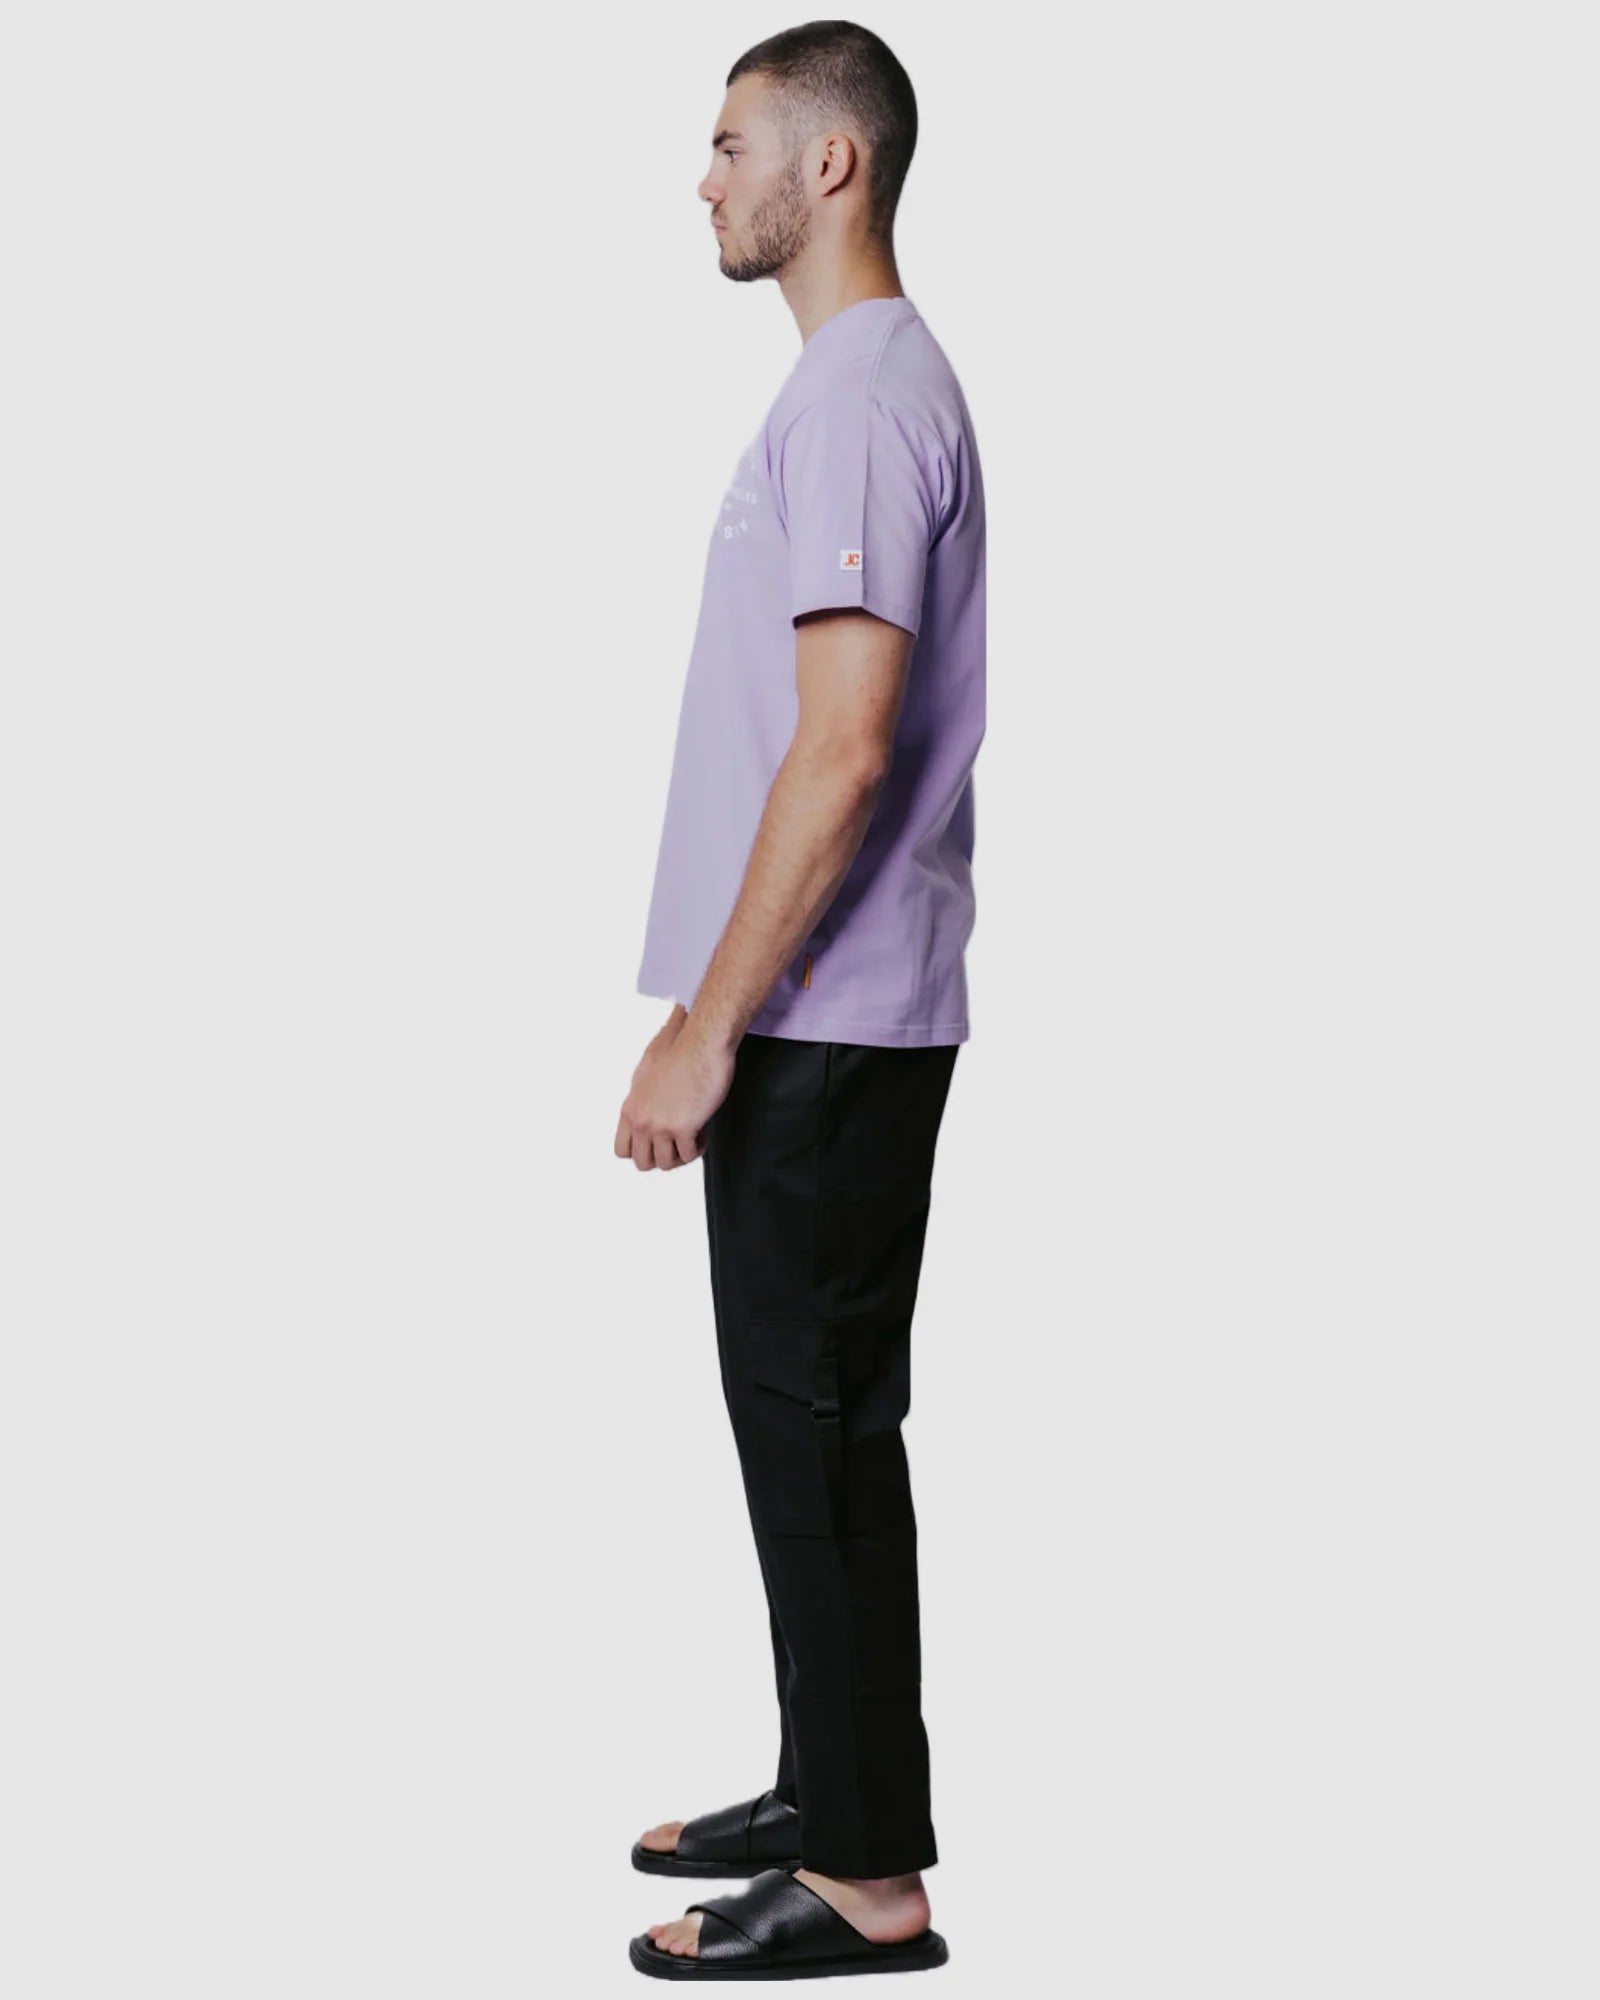 Justin Cassin Original T-Shirt in Lilac Color 5